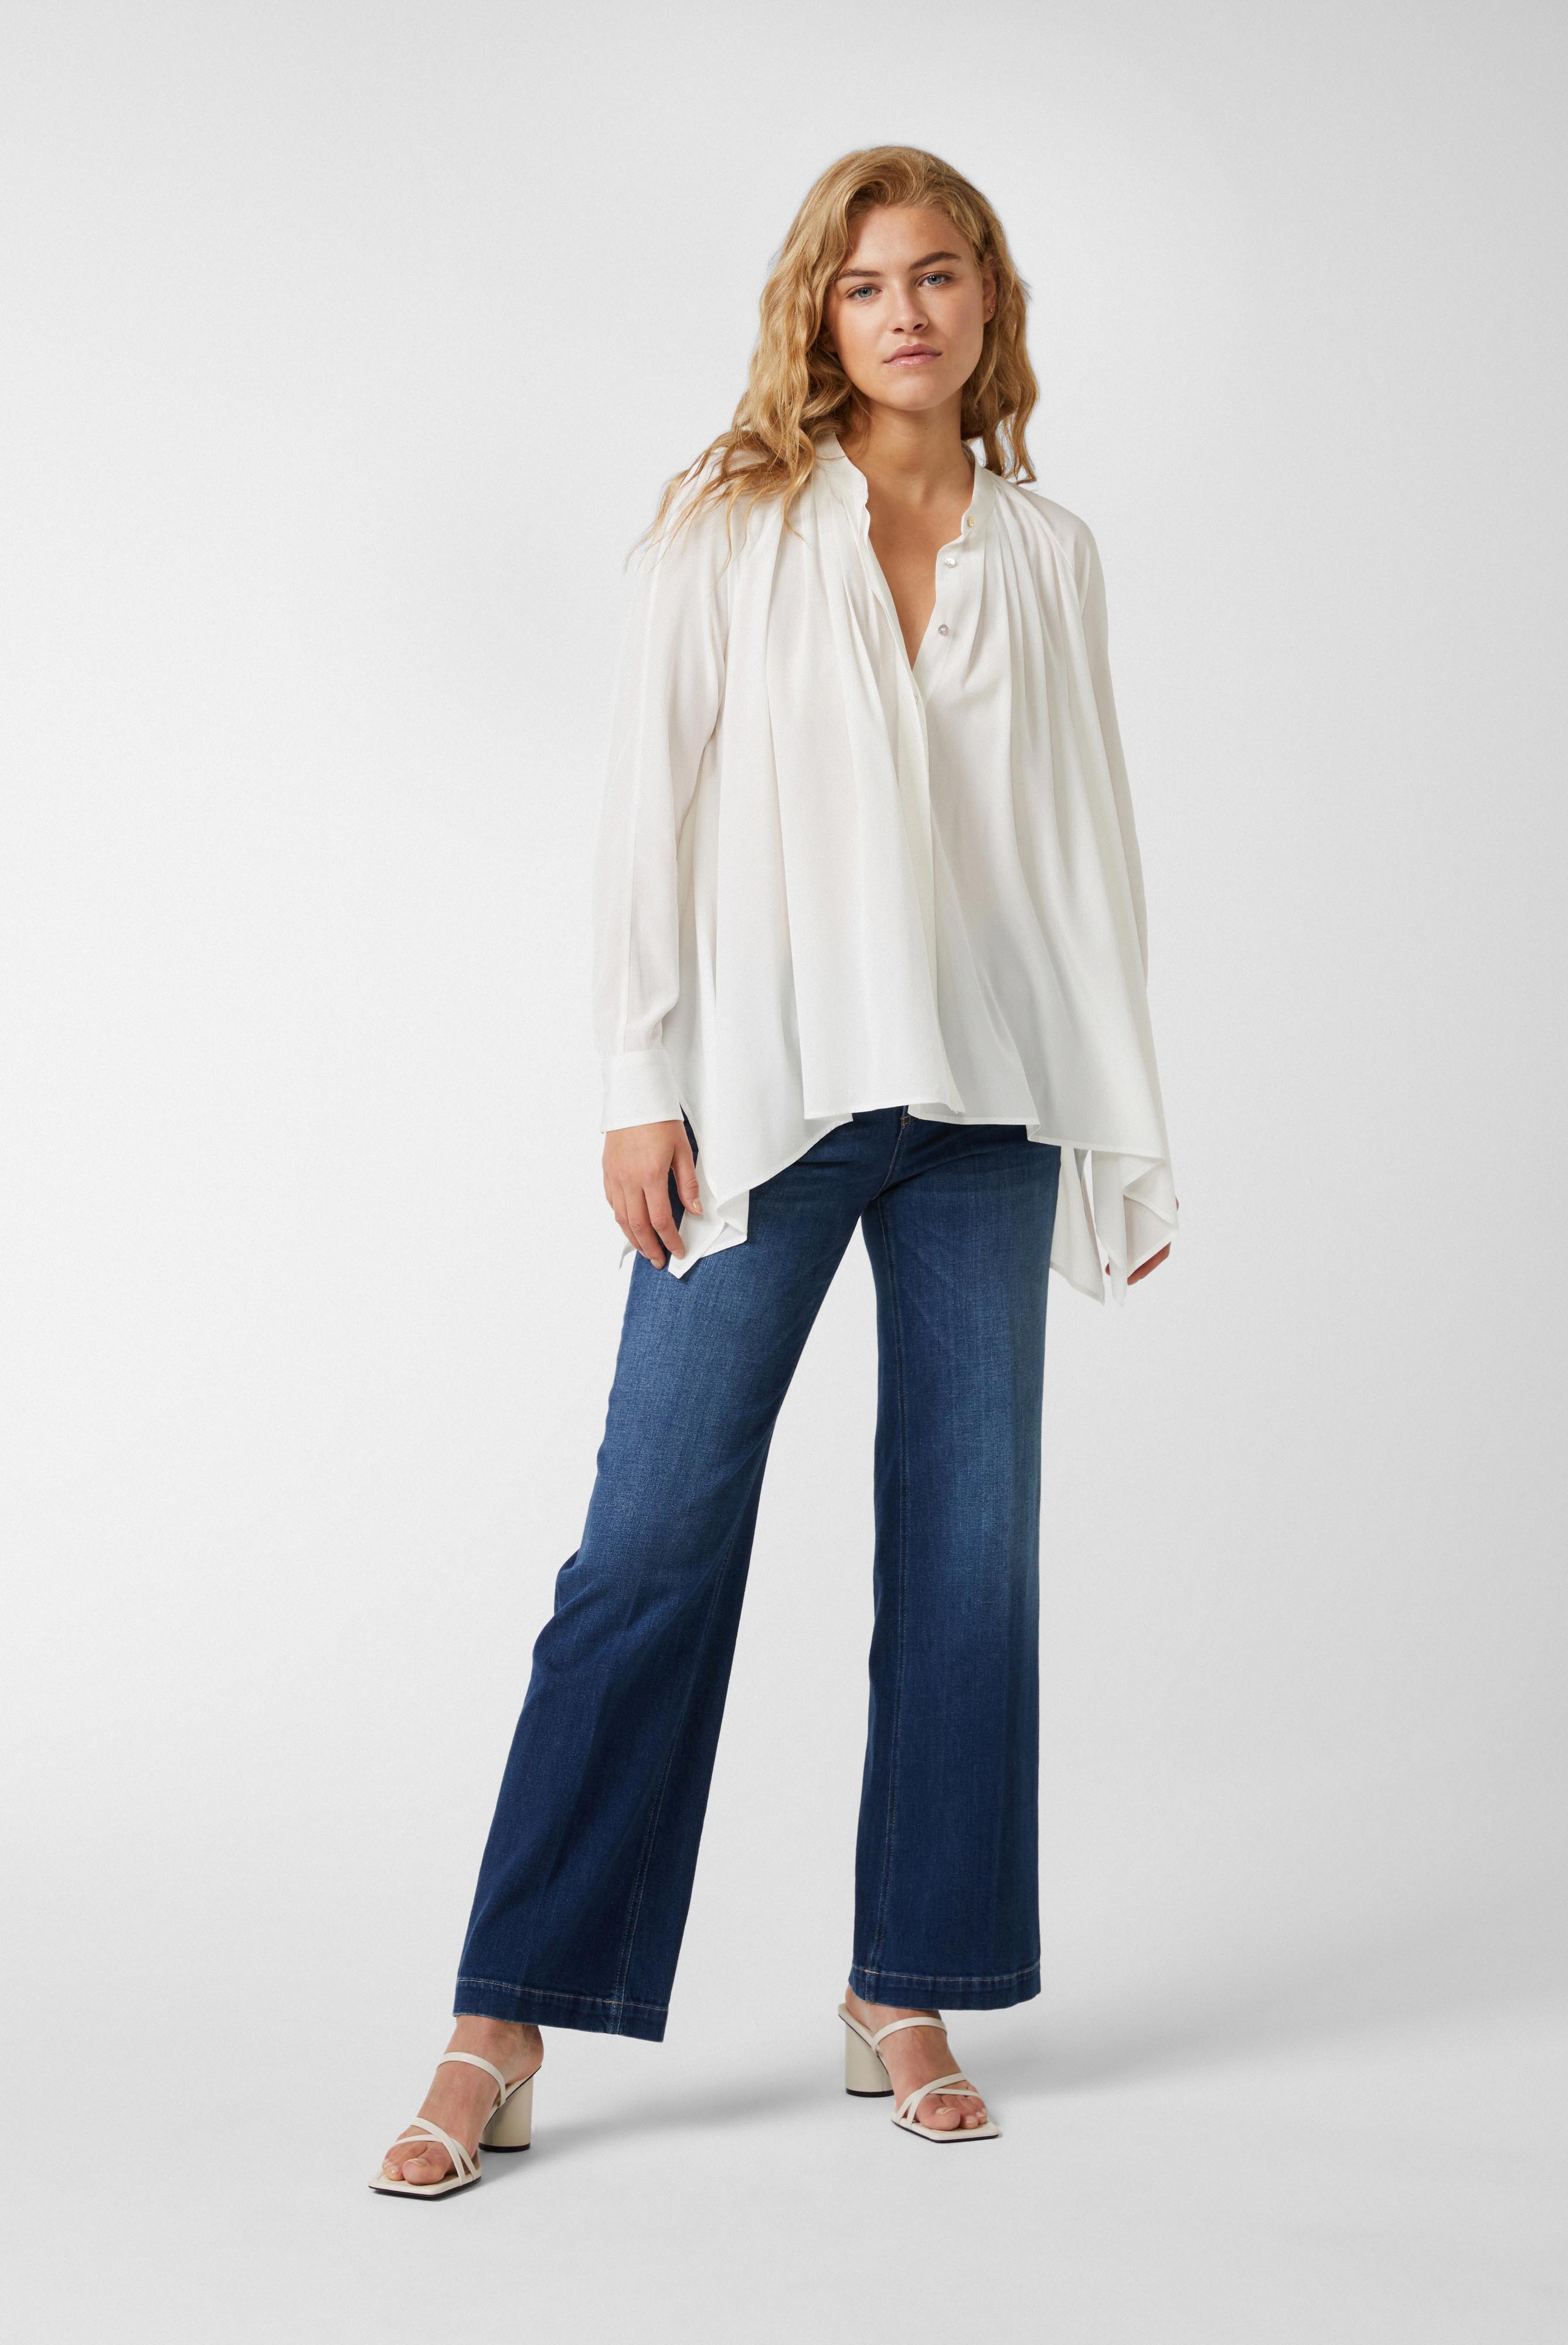 Meisterwerk Blouses+Crepe blouse with asymmetric hem white+05.525P.07.155553.105.32